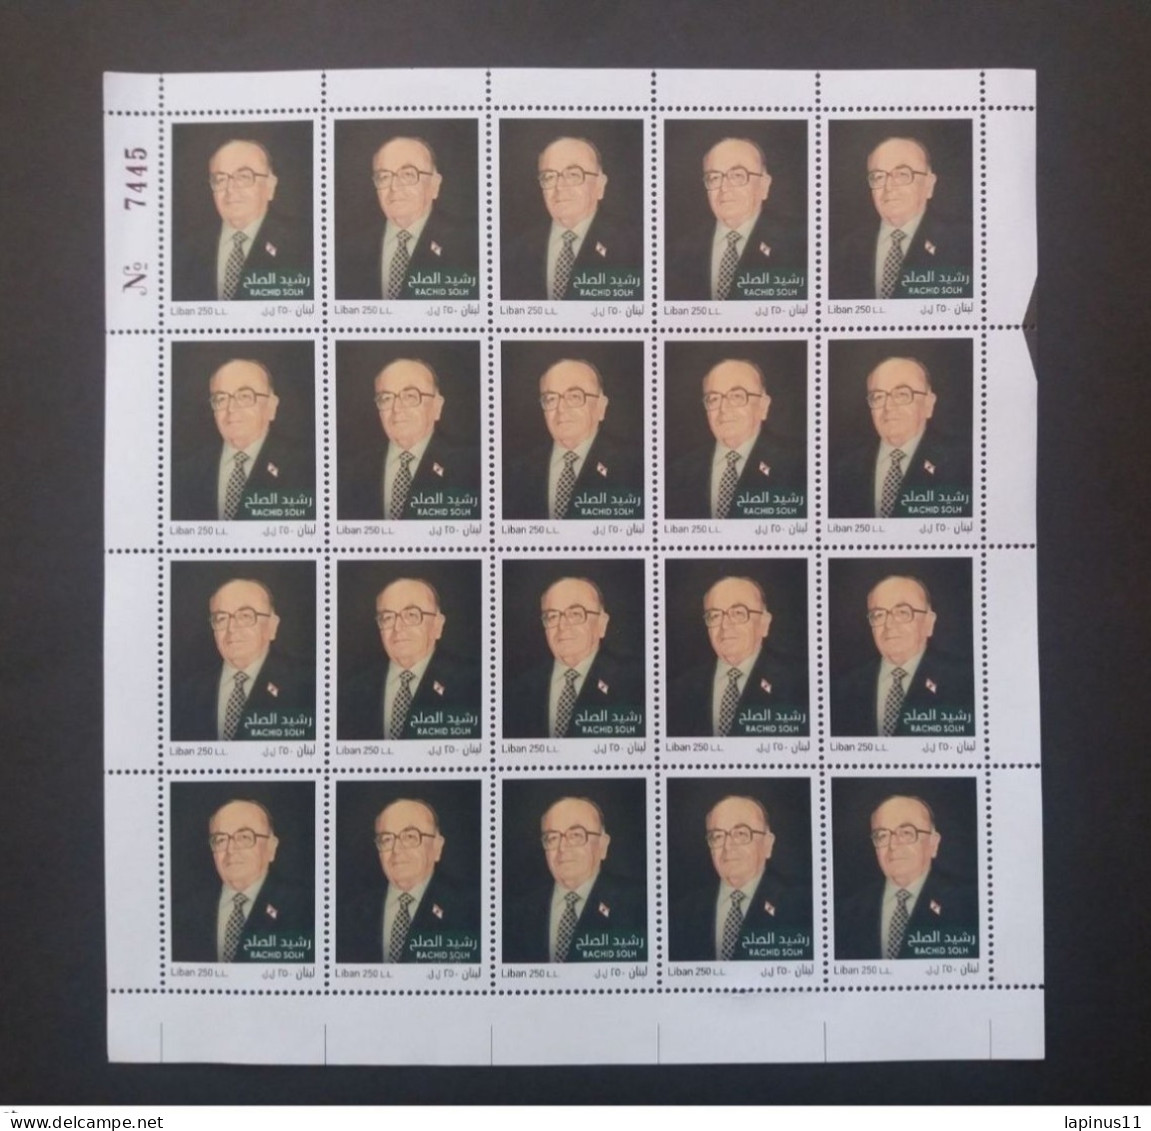 LIBAN لبنان LEBANON 2018 Rachid Solh, 1926-2014 Stamps Full Sheet MNH - Líbano